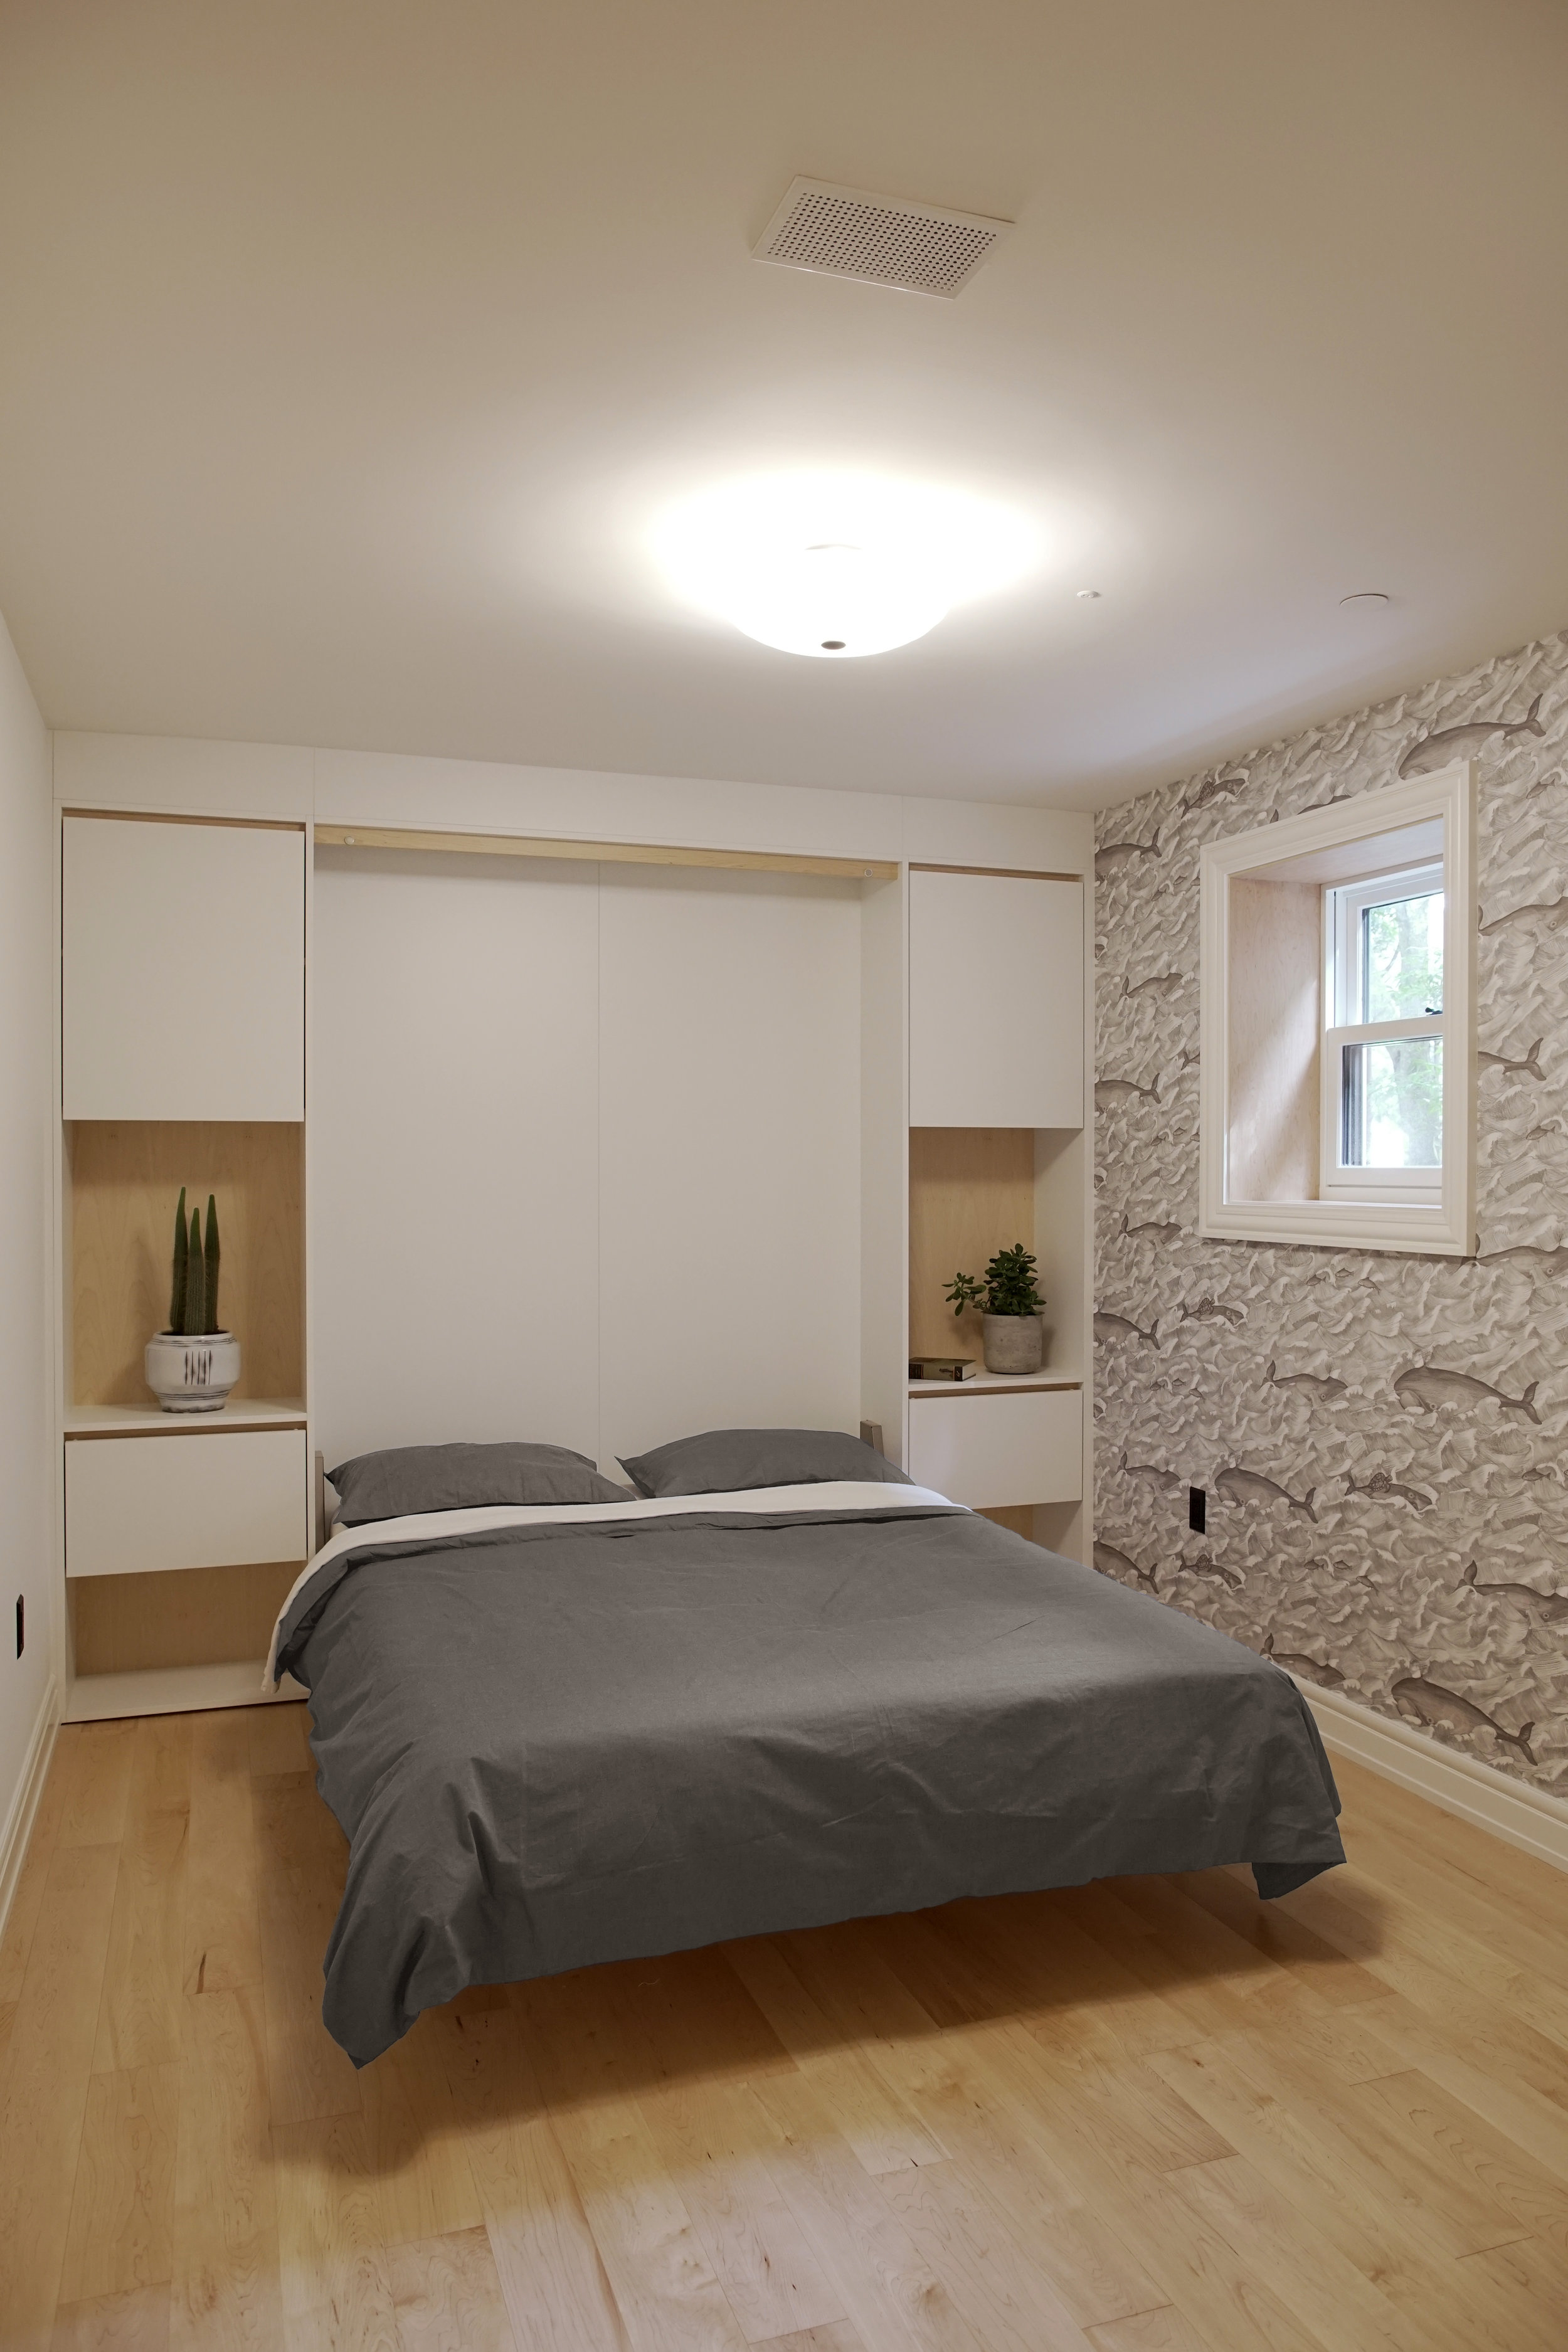 Anthill Studio - NEXUS - Wallbed Furniture System - Built in Furniture - Interior Design